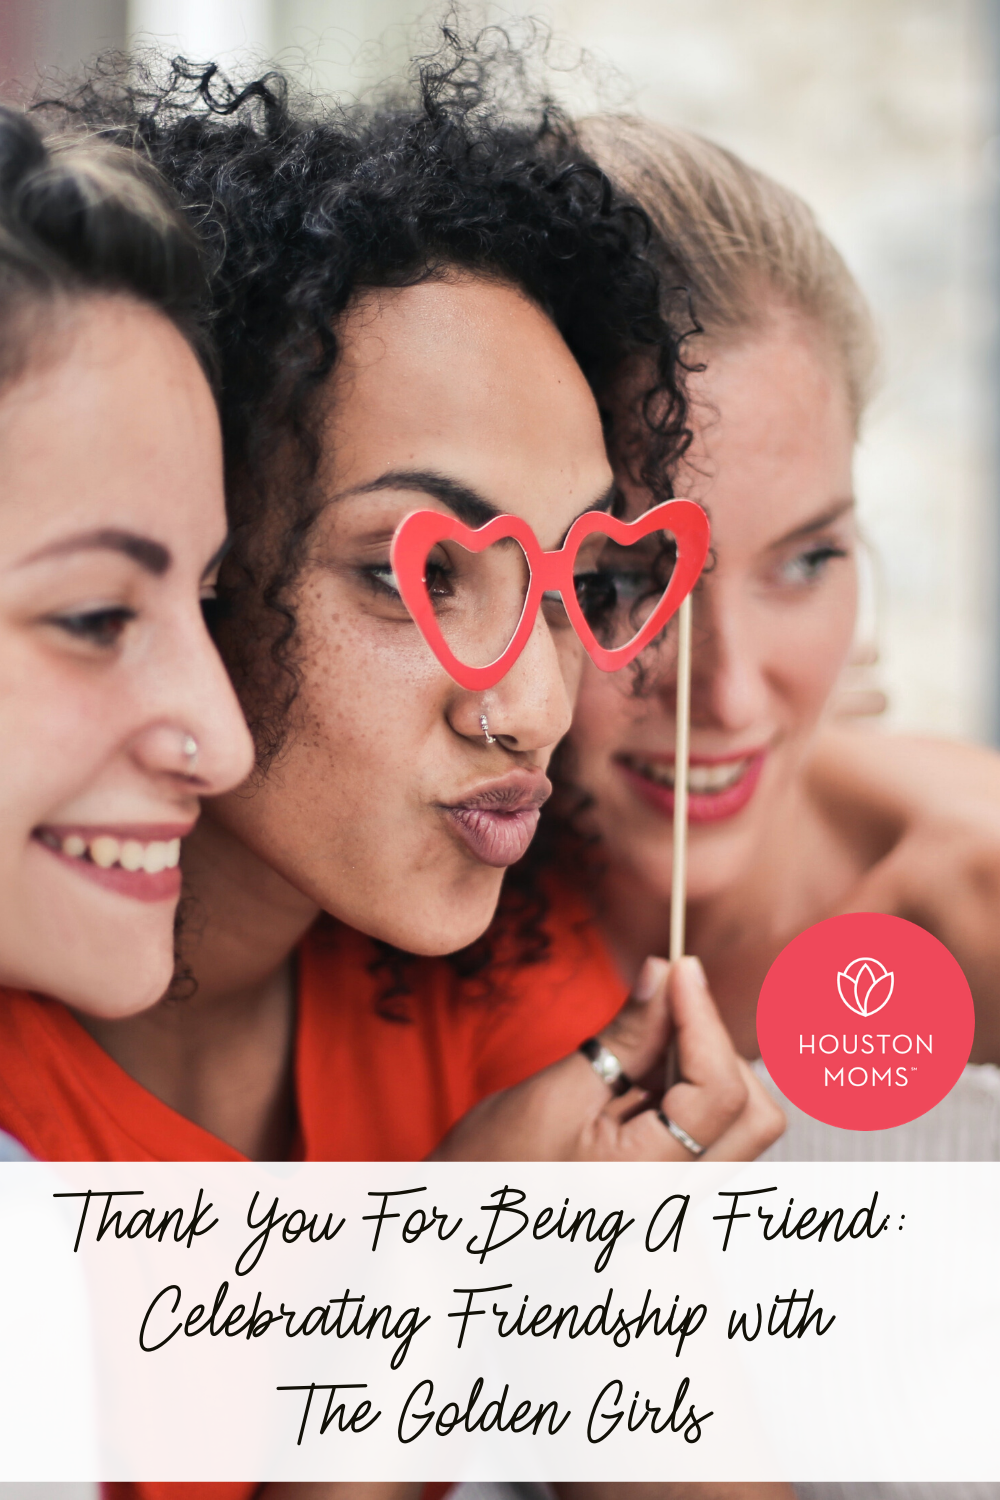 Houston Moms "Thank You For Being a Friend:: Celebrating Friendship with The Golden Girls" #houstonmoms #houstonmomsblog #momsaroundhouston